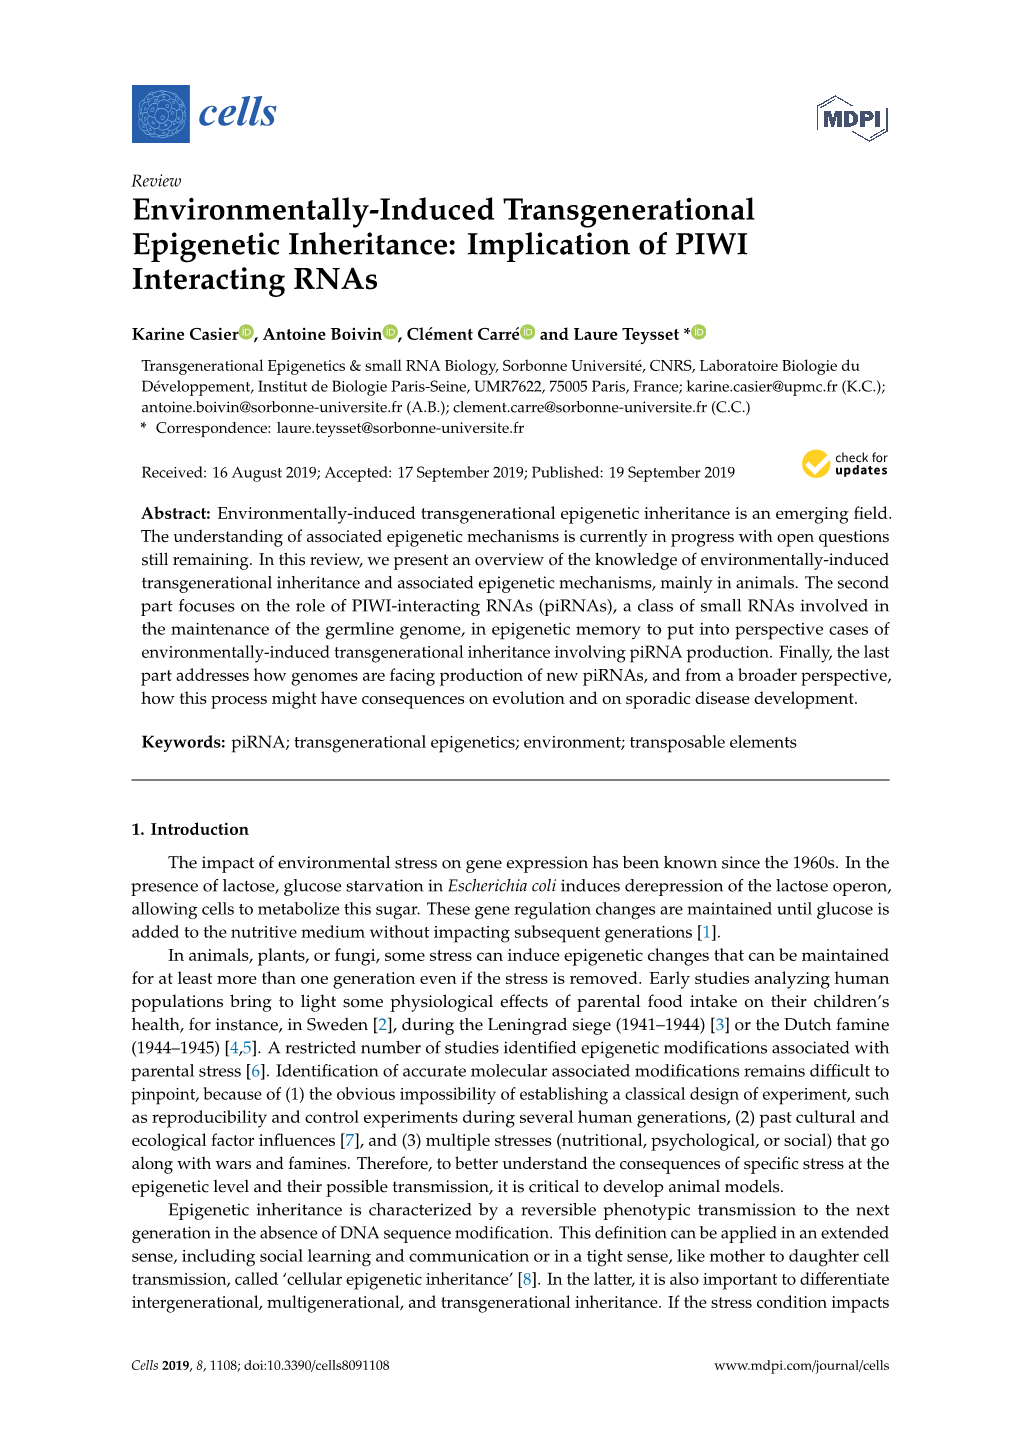 Environmentally-Induced Transgenerational Epigenetic Inheritance: Implication of PIWI Interacting Rnas